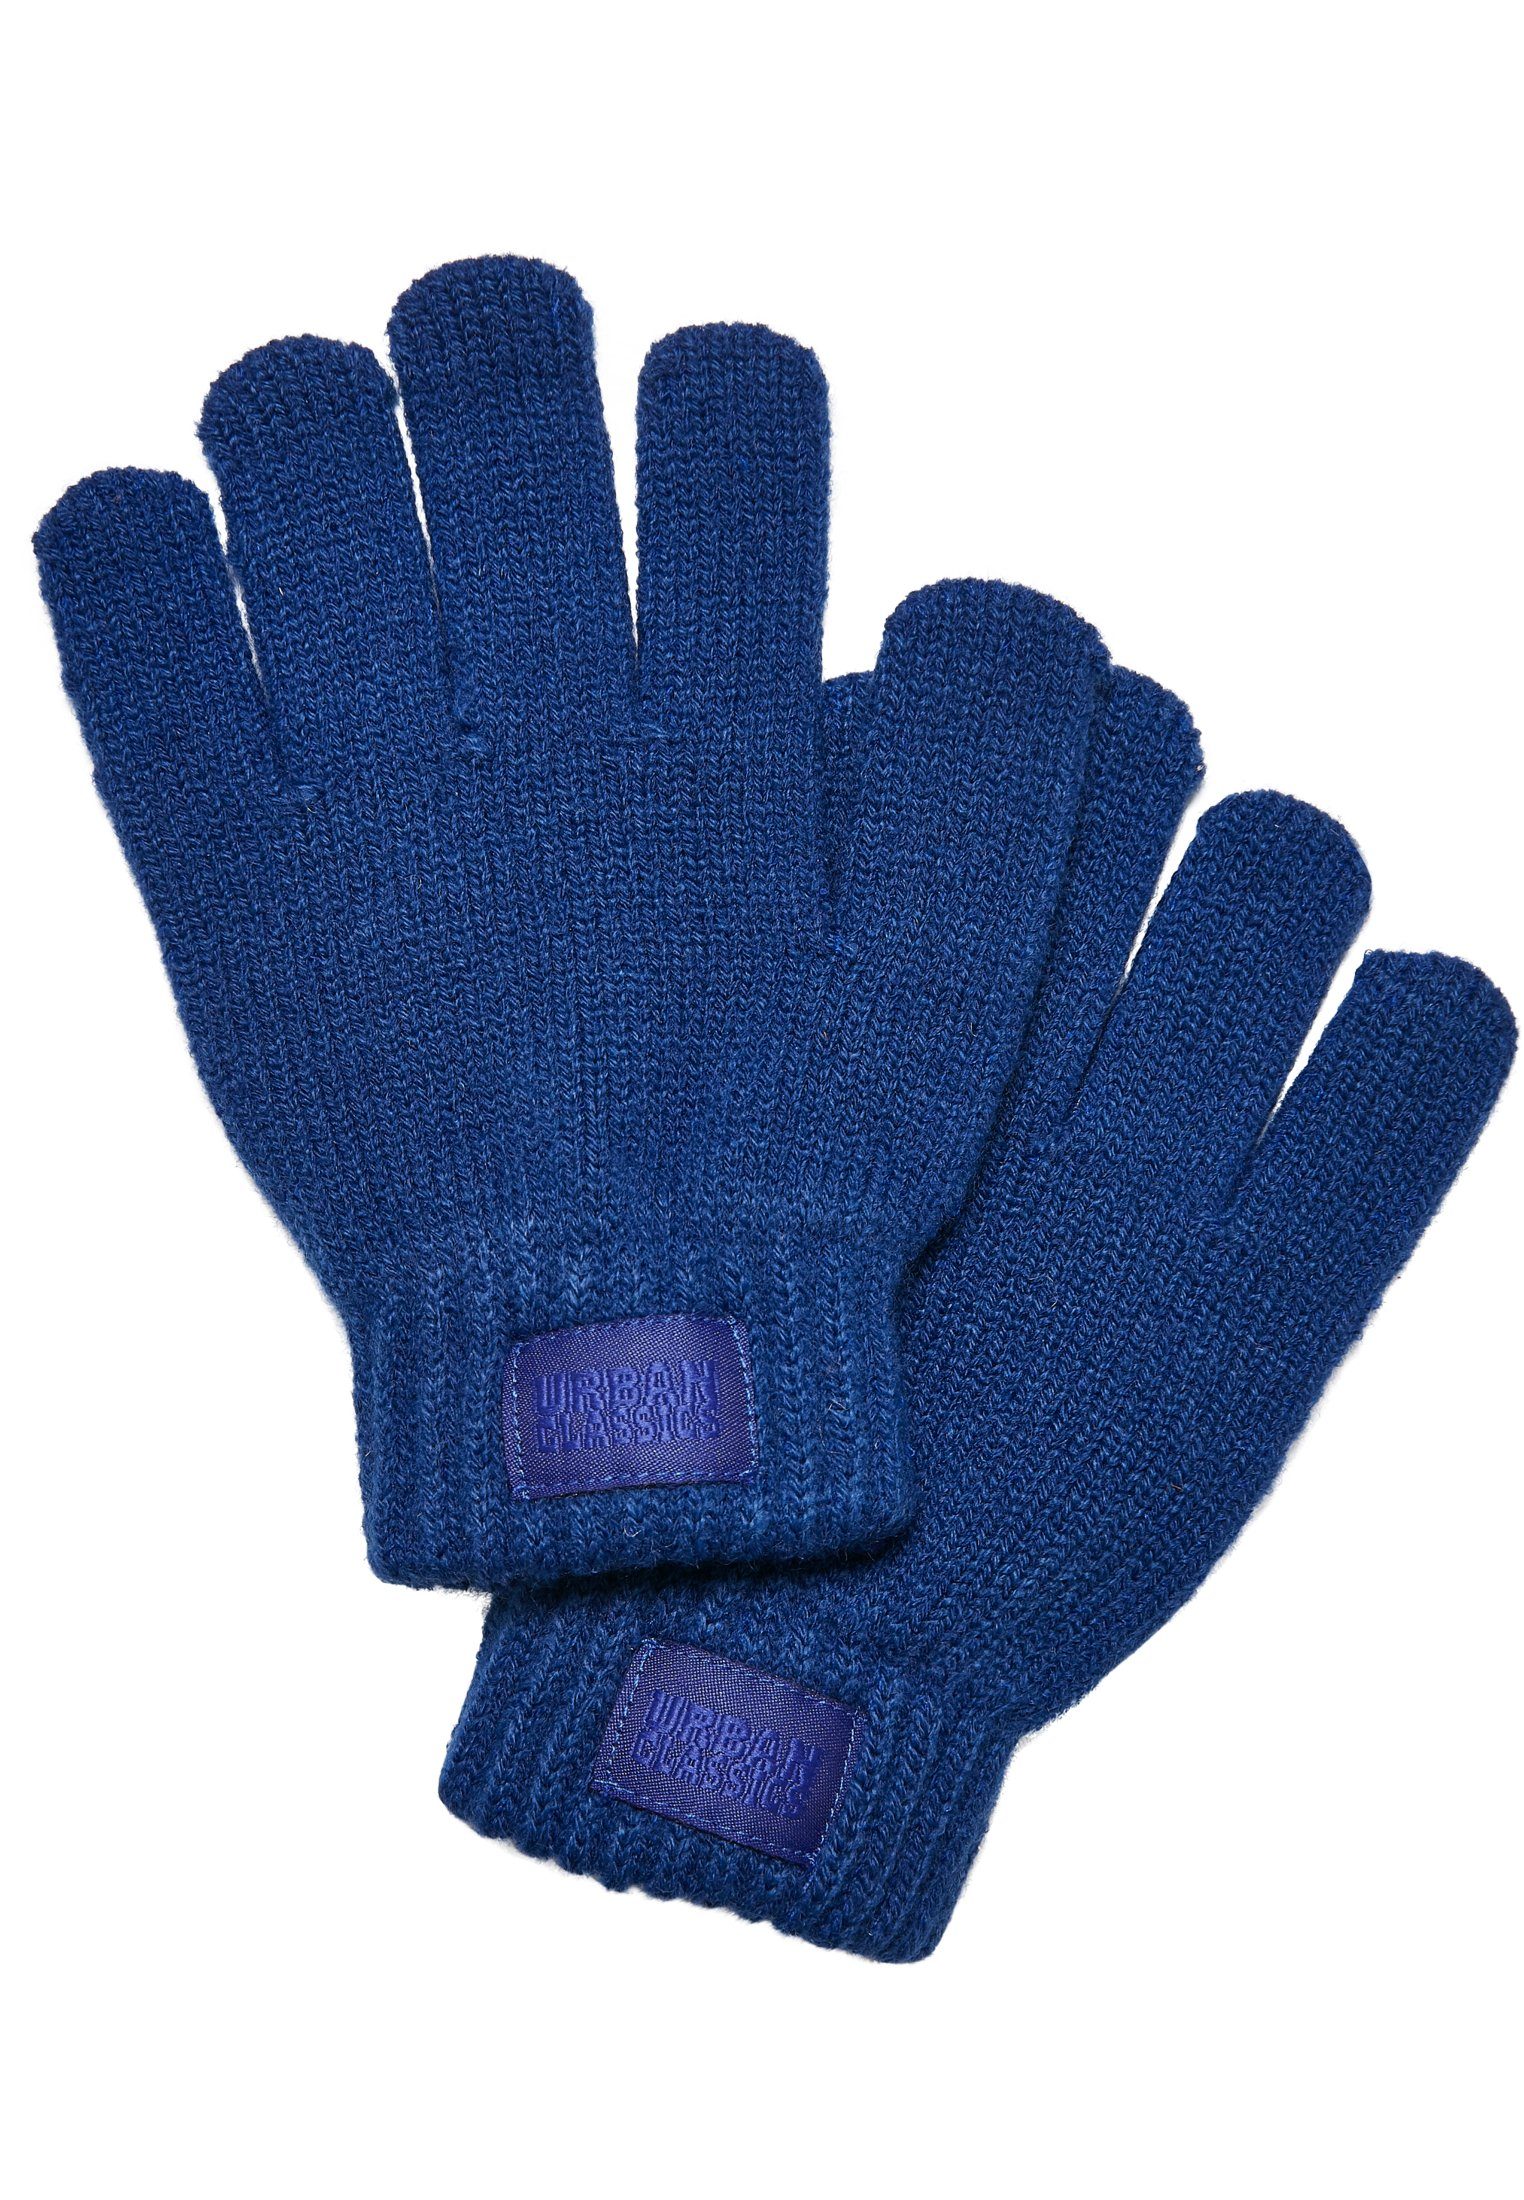 Unisex Knit URBAN Kids Baumwollhandschuhe CLASSICS royal Gloves